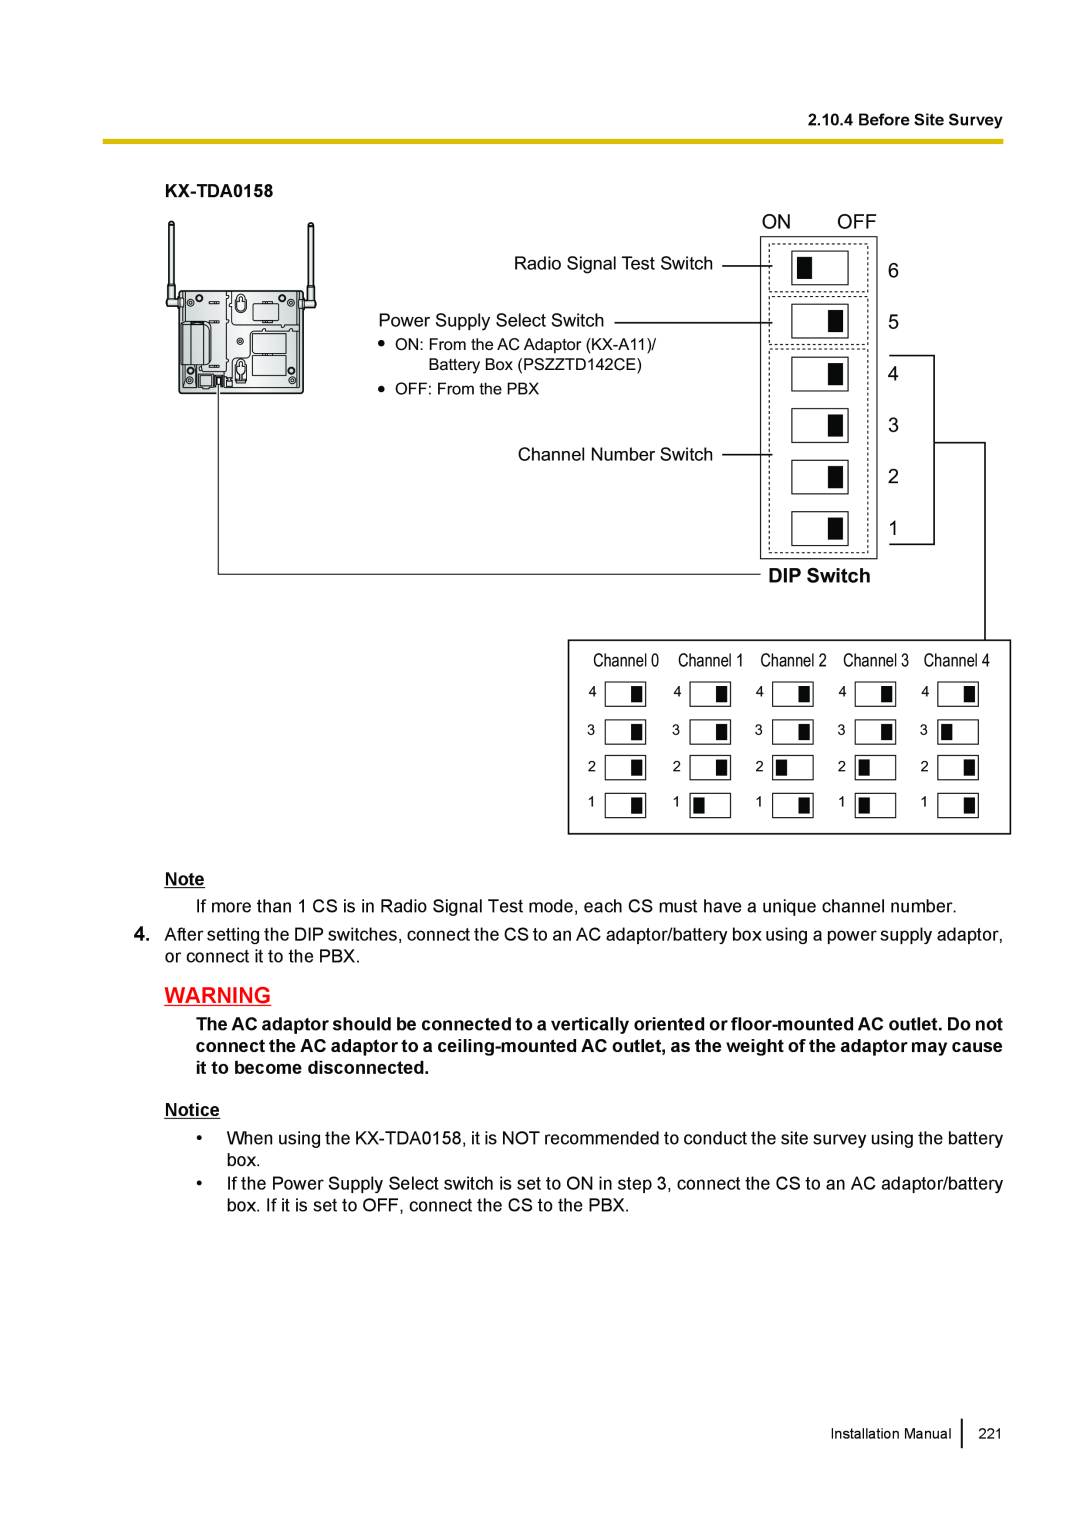 Panasonic KX-TDA100 installation manual On Off, DIP Switch, KX-TDA0158 